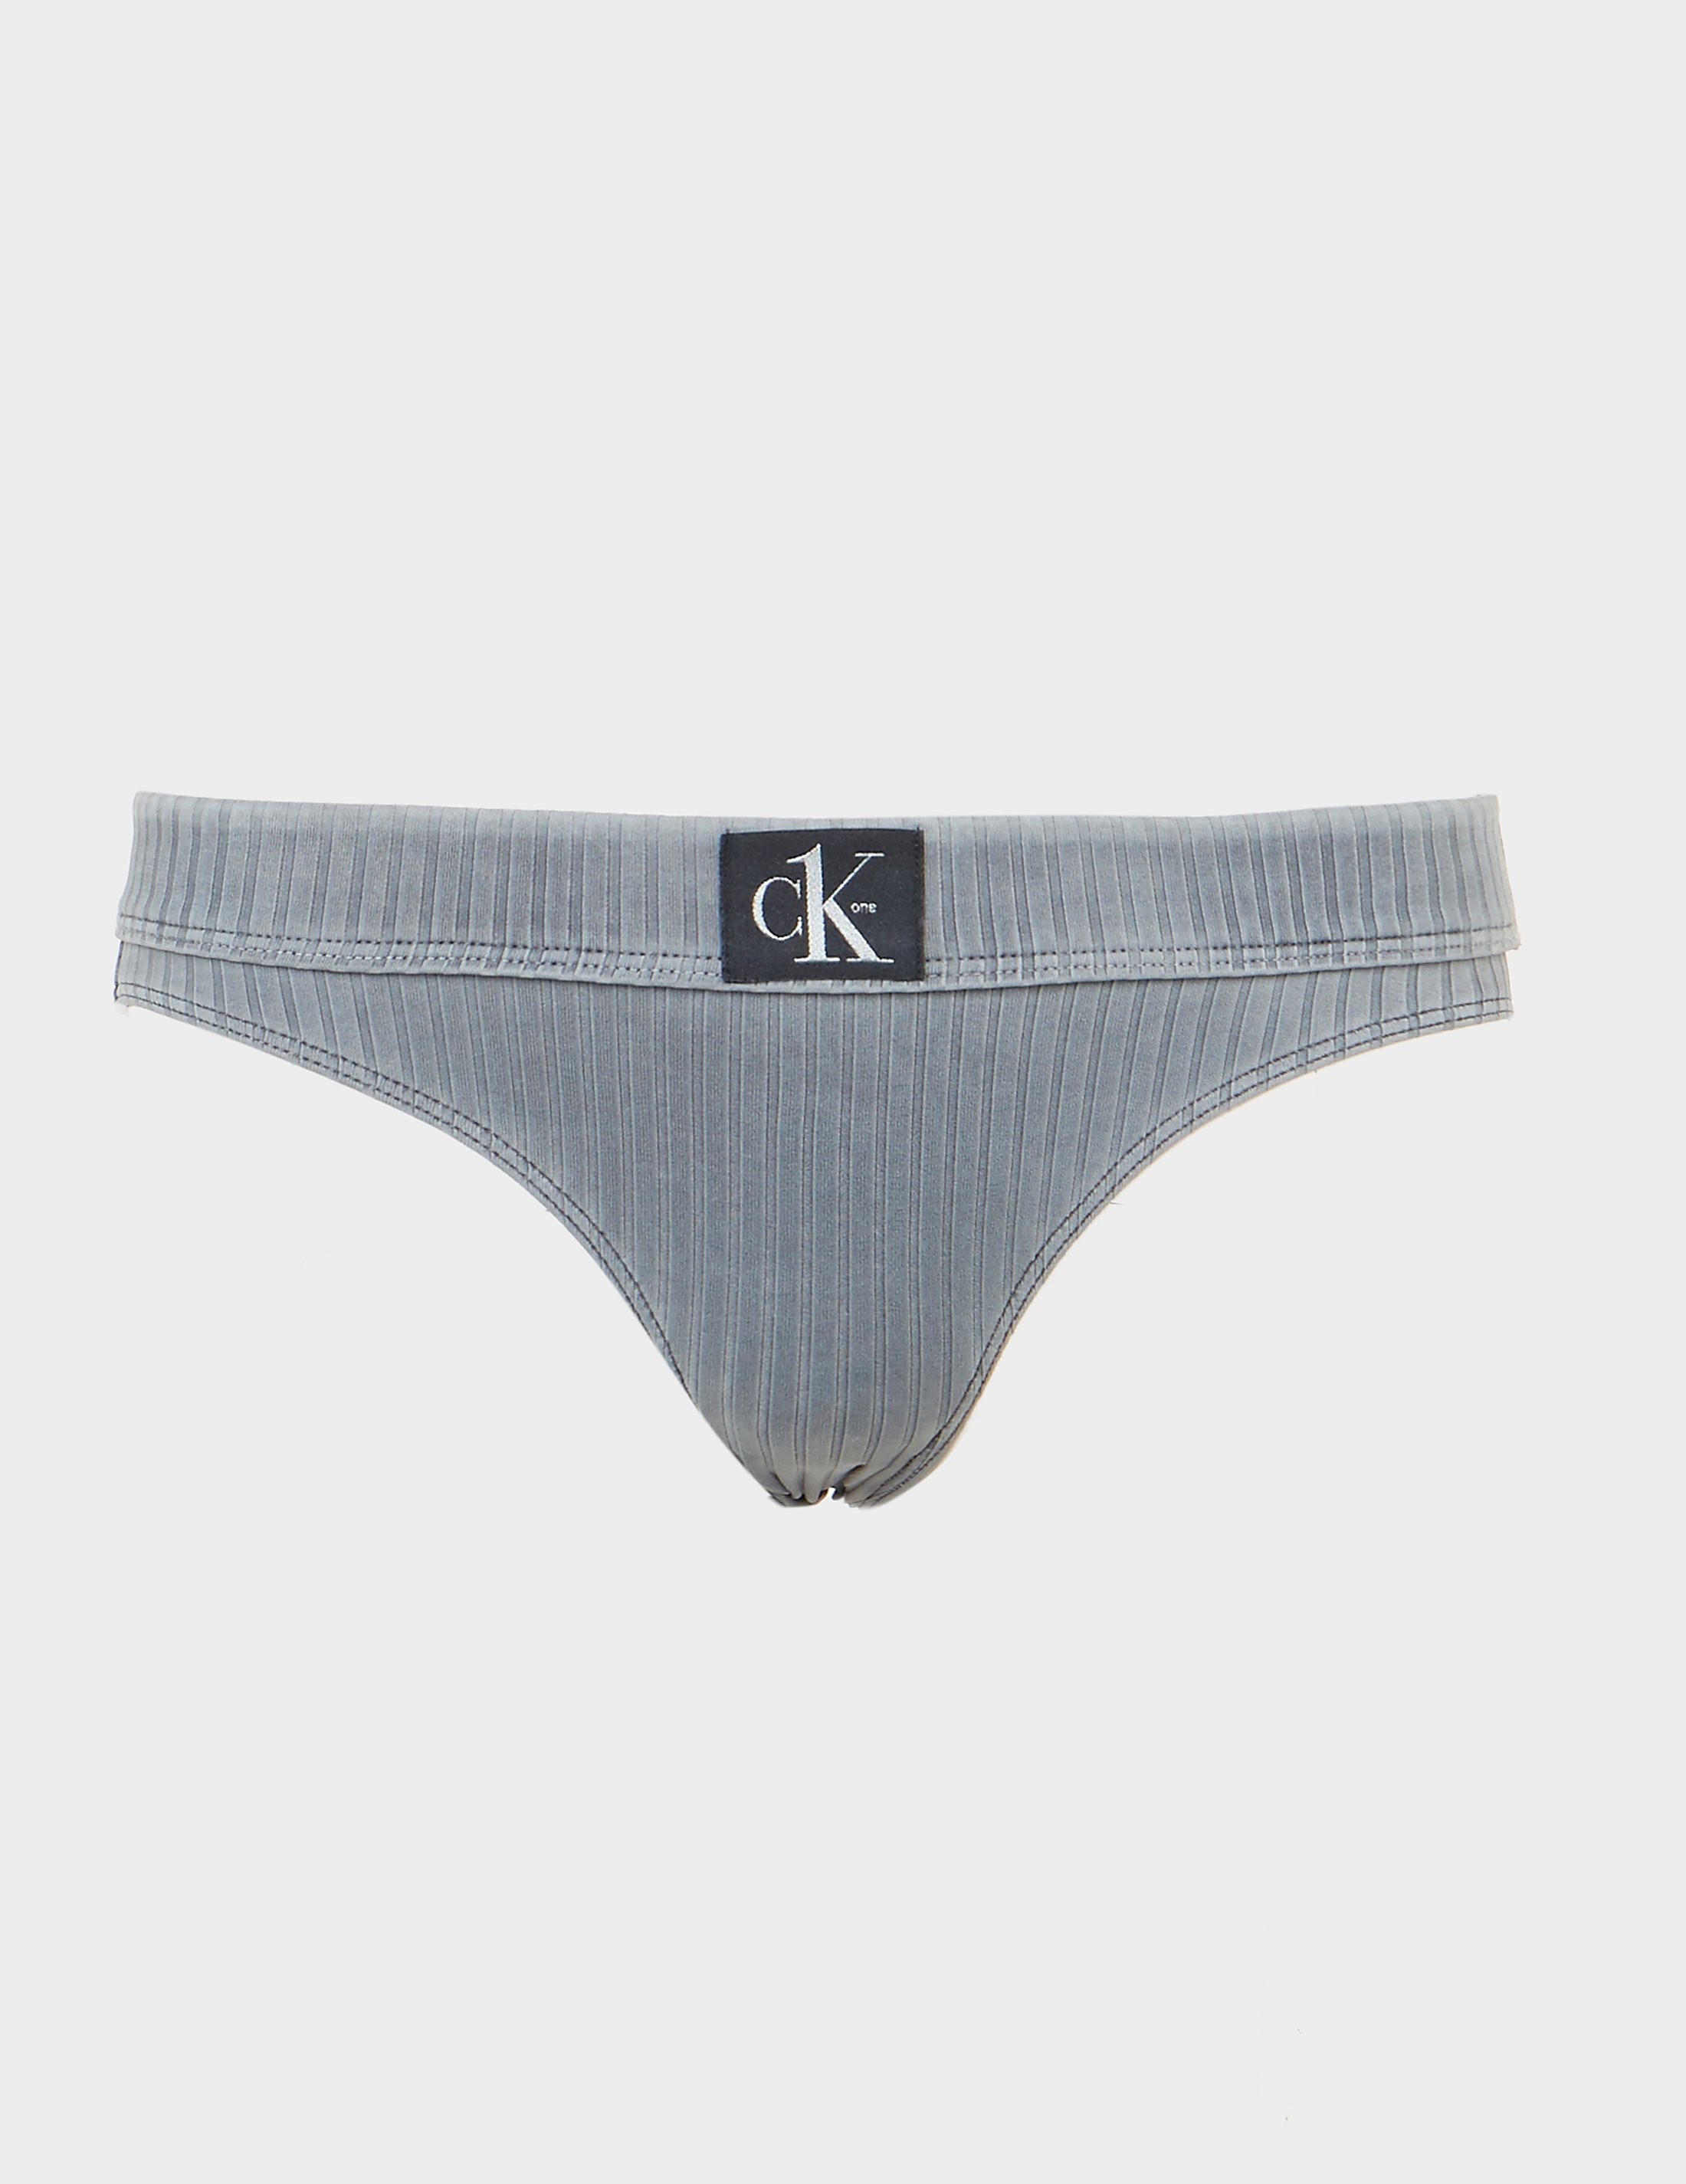 Women's Calvin Klein Swim CK One Authentic Bikini Bottoms Grey, Grey product